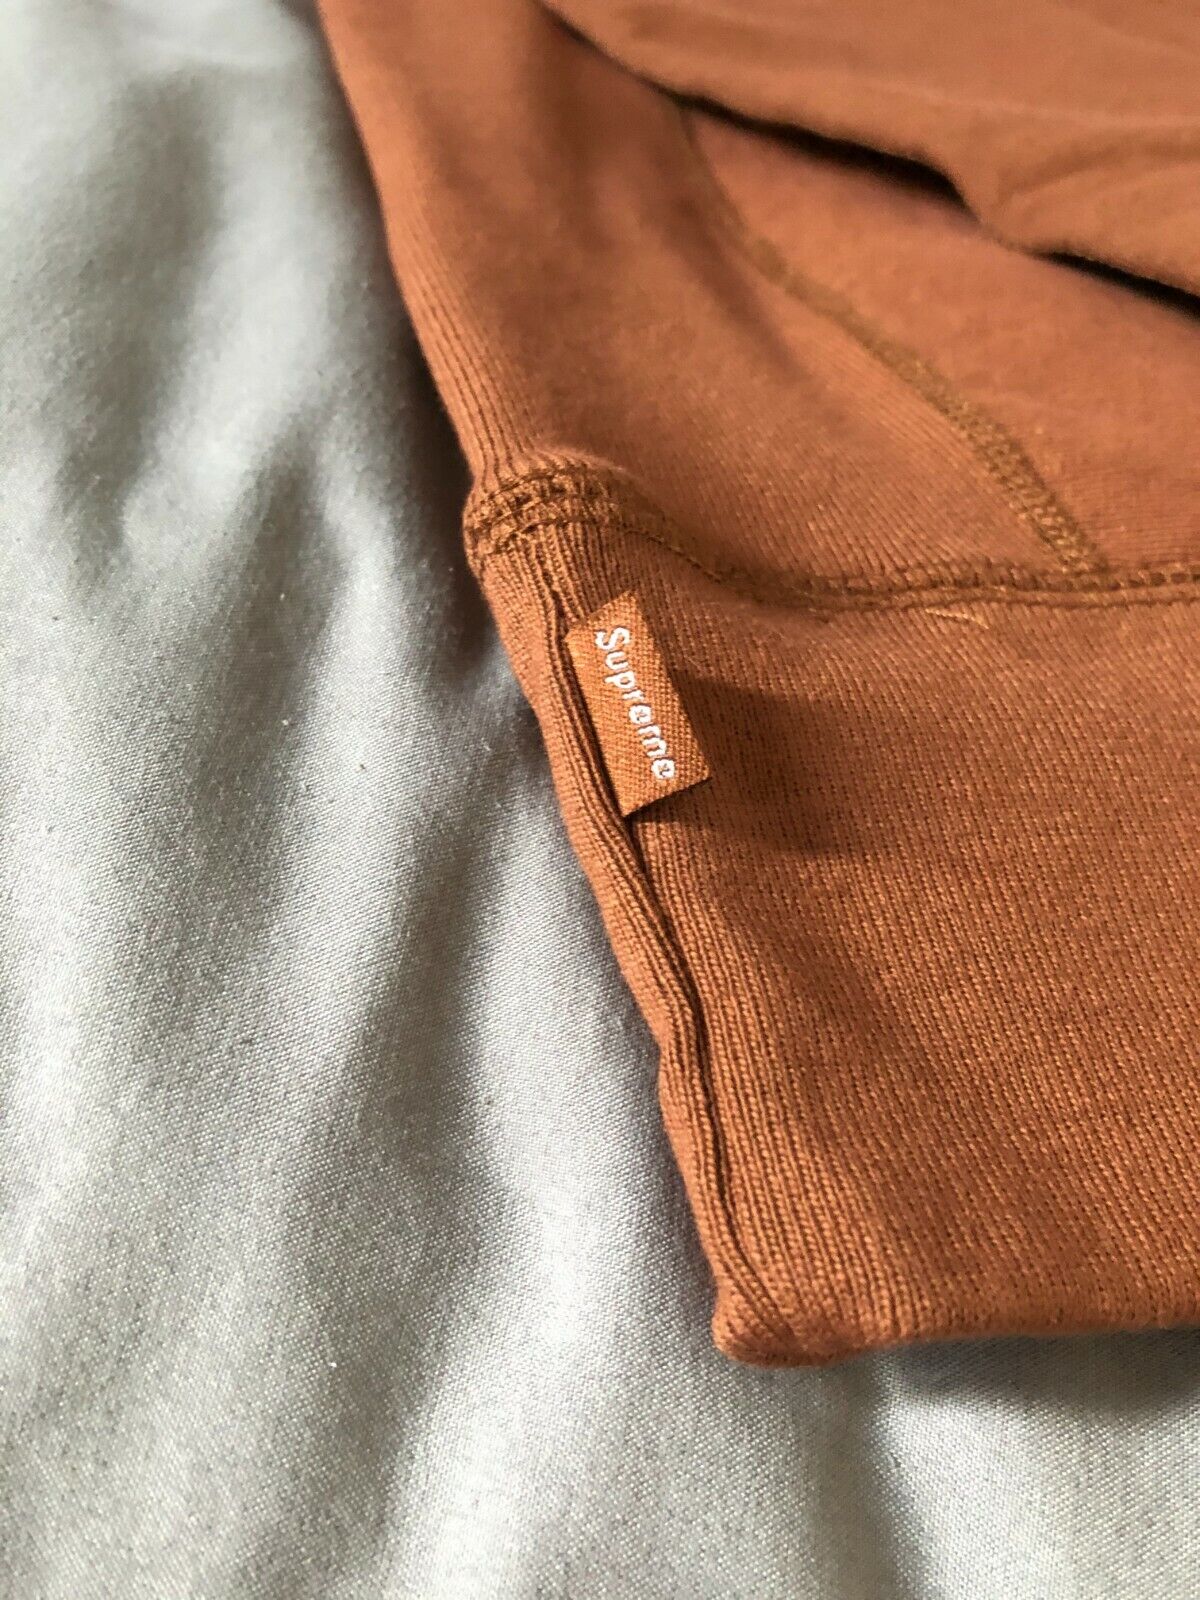 Supreme FW17 box logo hooded sweatshirt in Rust color - Medium | eBay